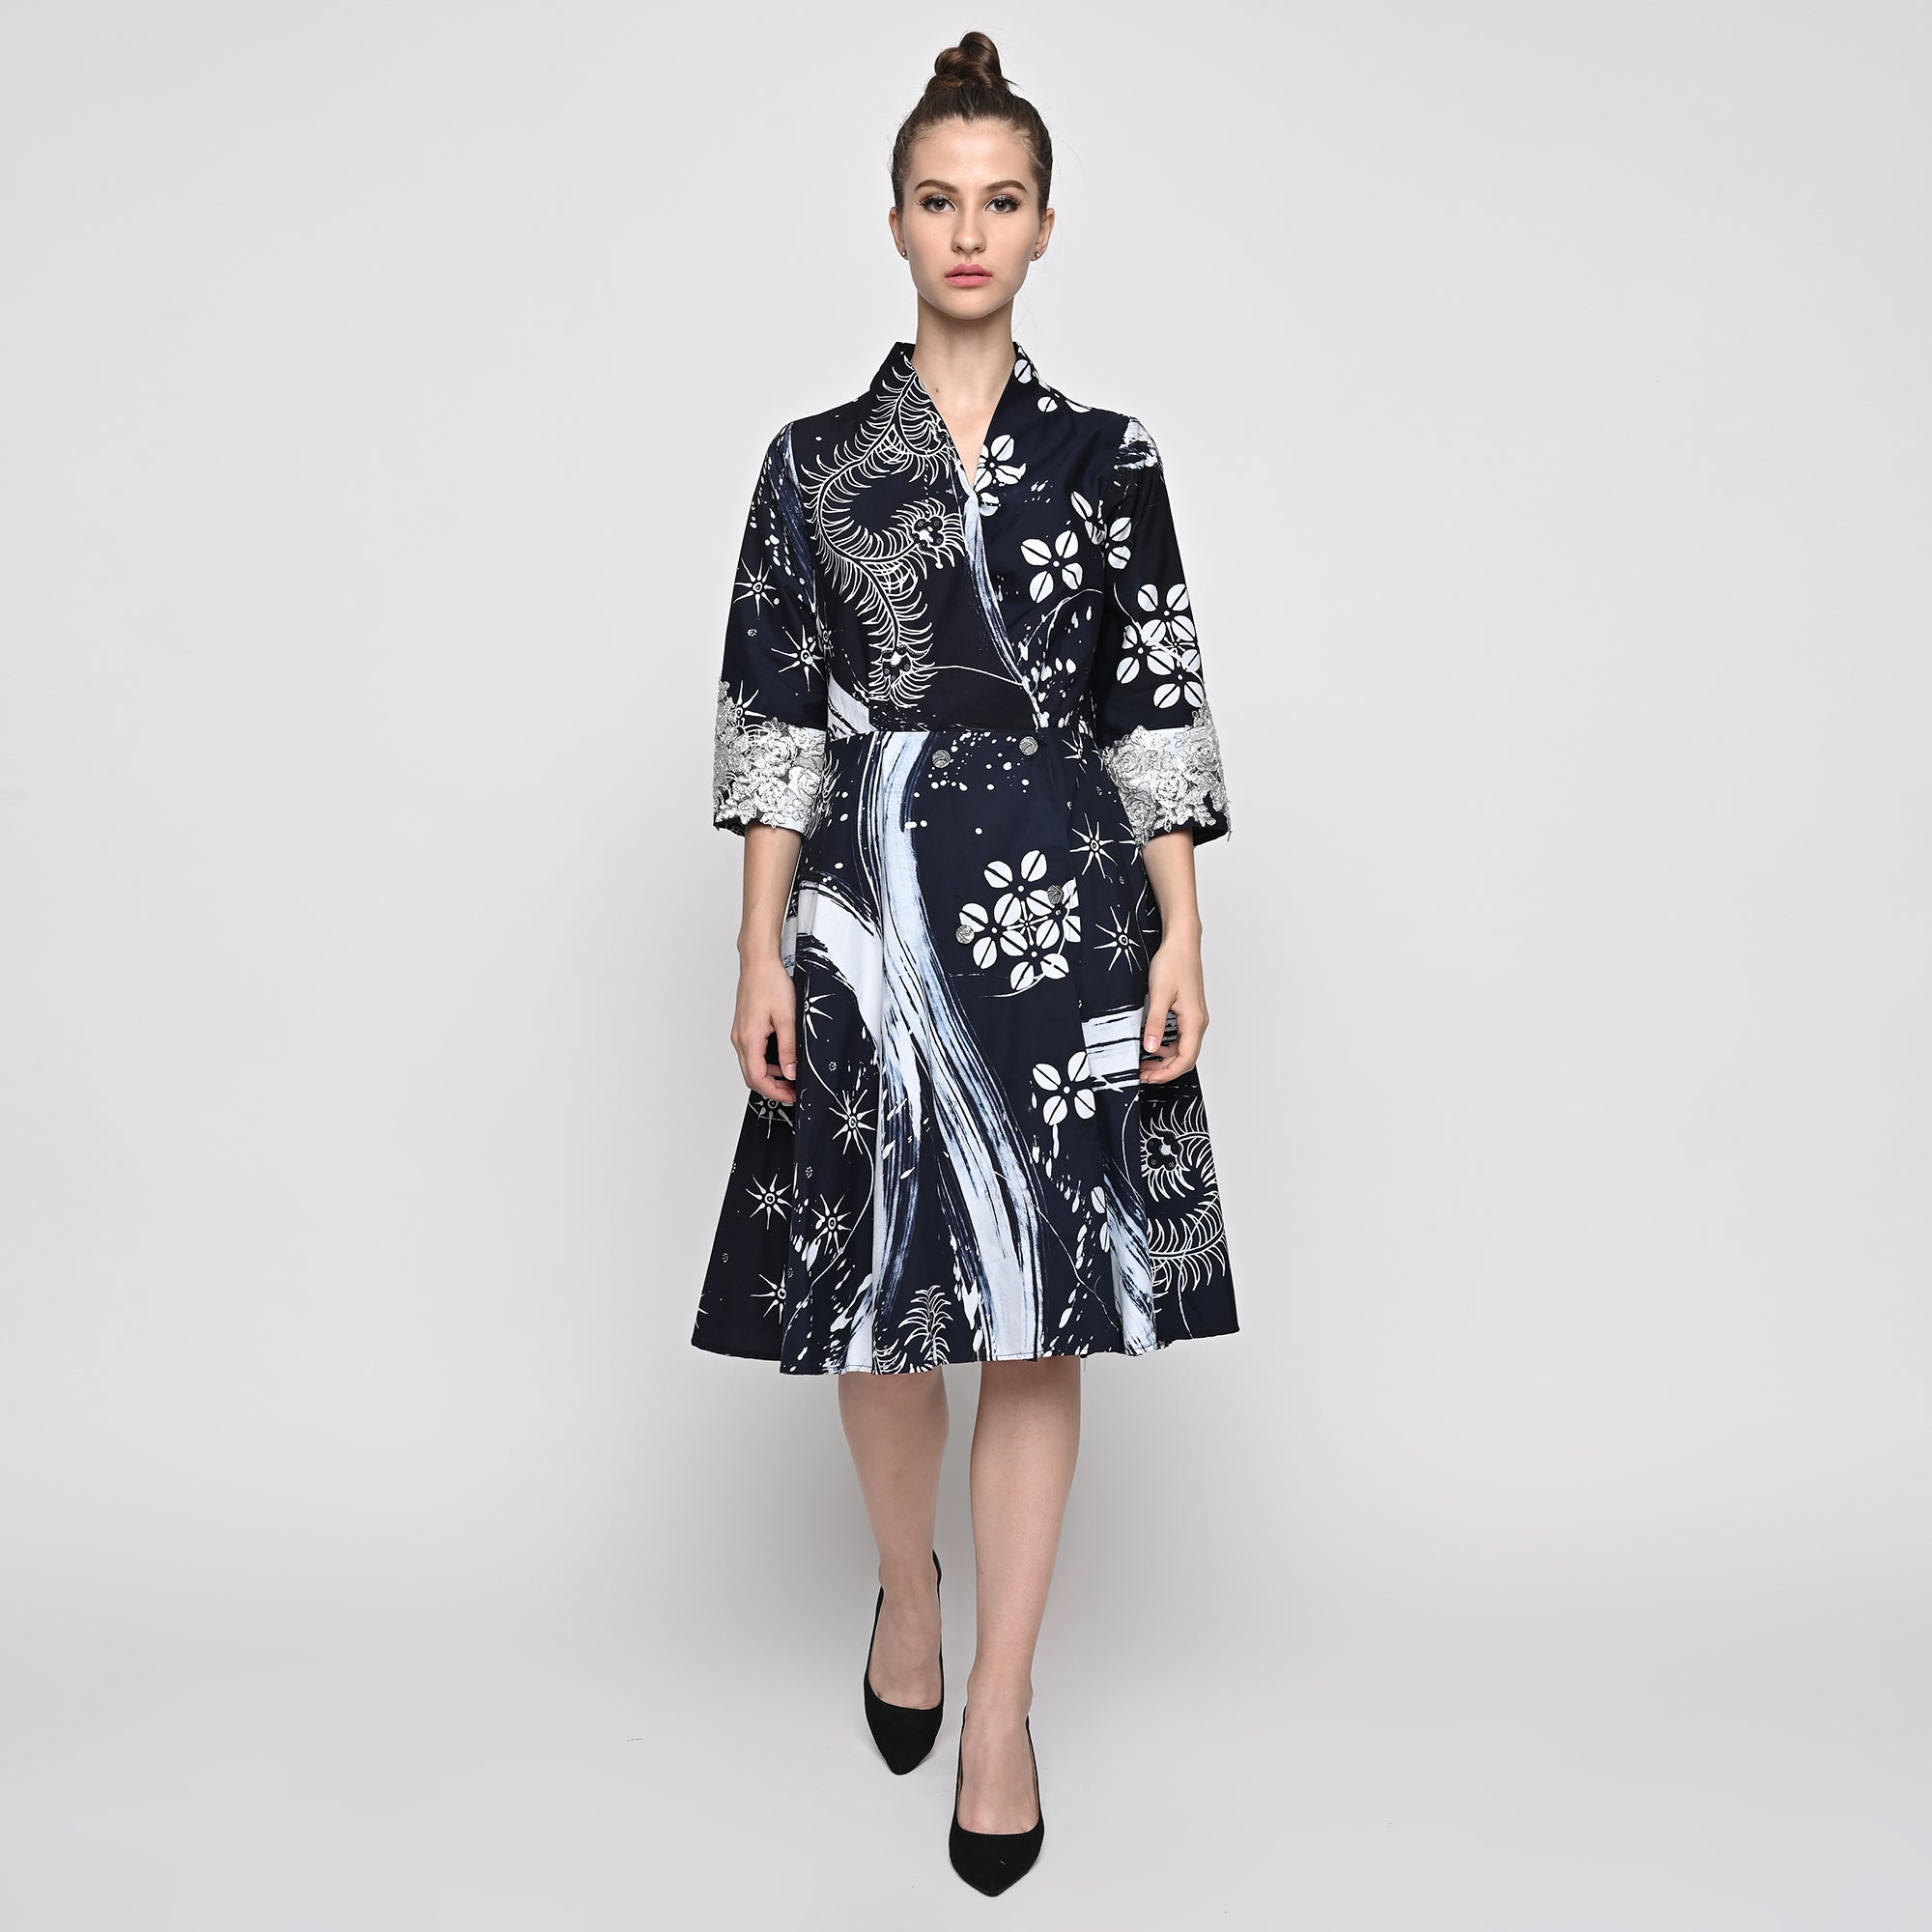 Nova Batik Ombak Dress – Entin Gartini